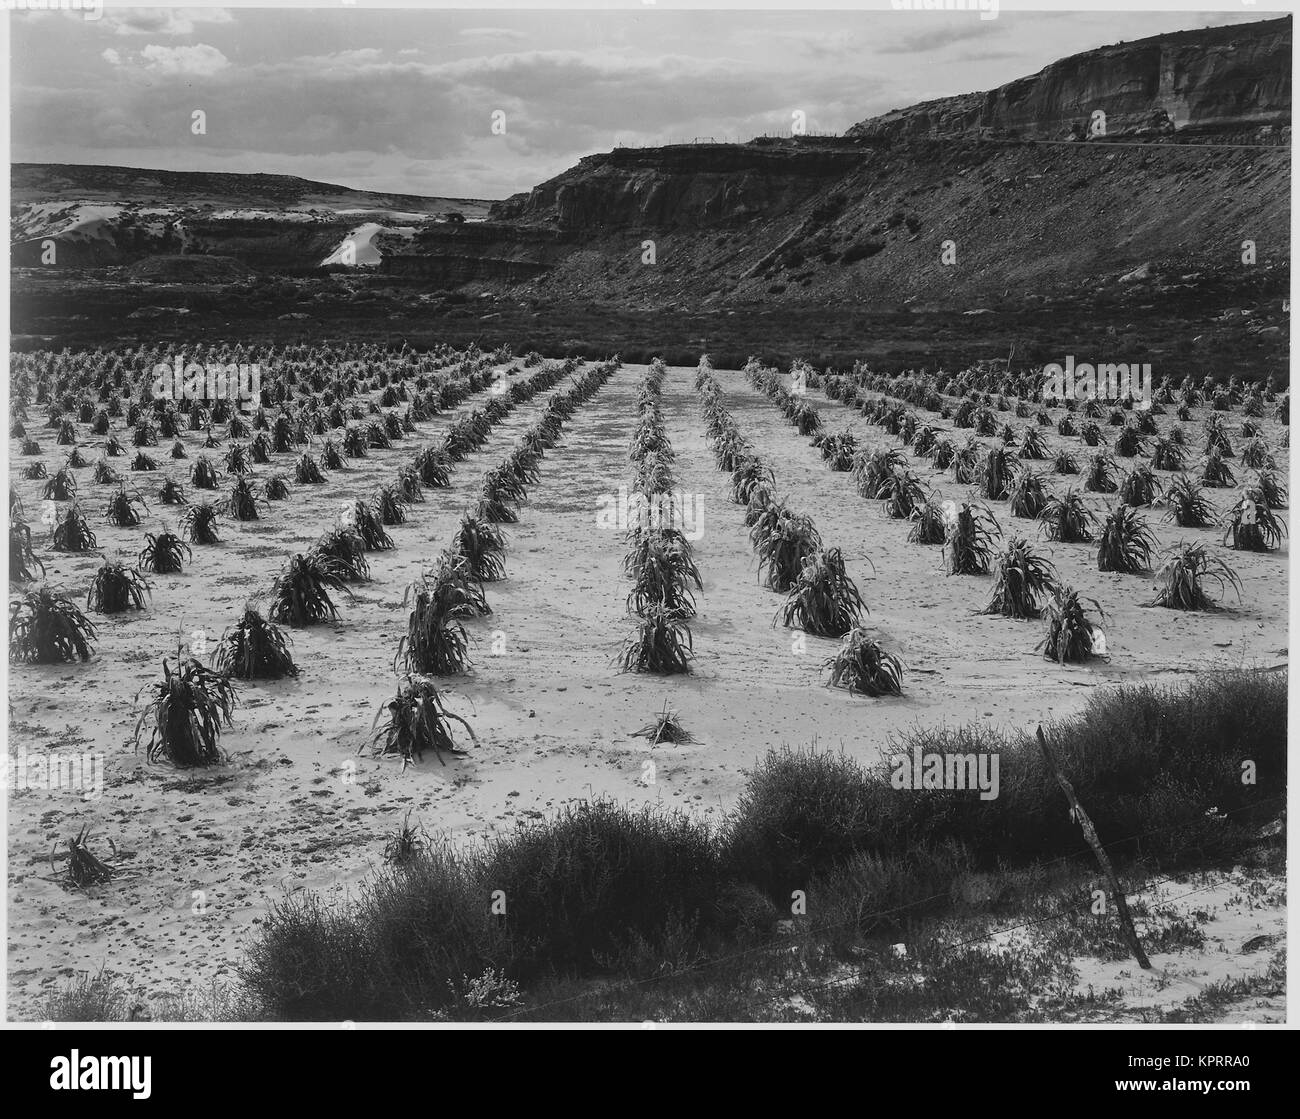 Looking across rows of corn cliff in background 'Corn Field Indian Farm near Tuba City Arizona in Rain 1941.' 1941 Stock Photo